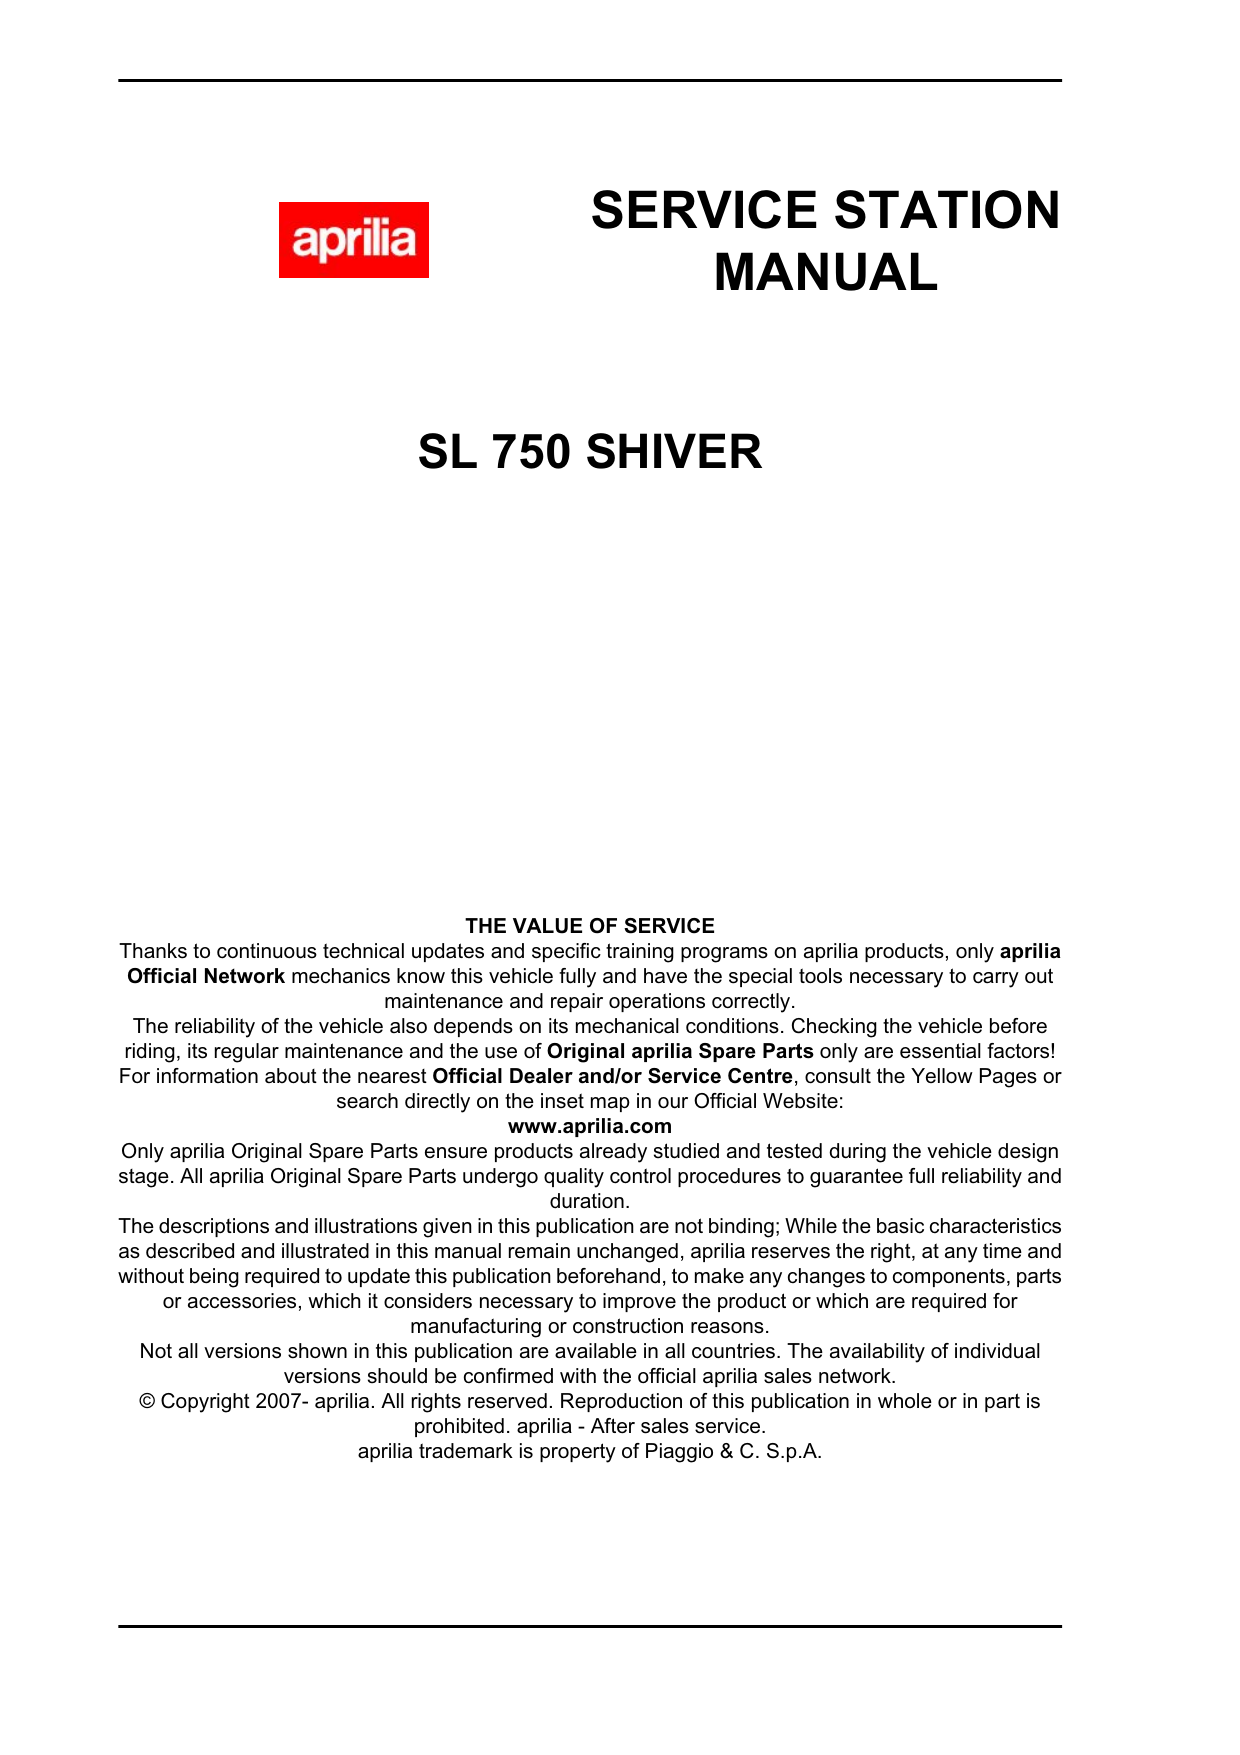 Aprilia SL 750 Shiver service station manual Preview image 2